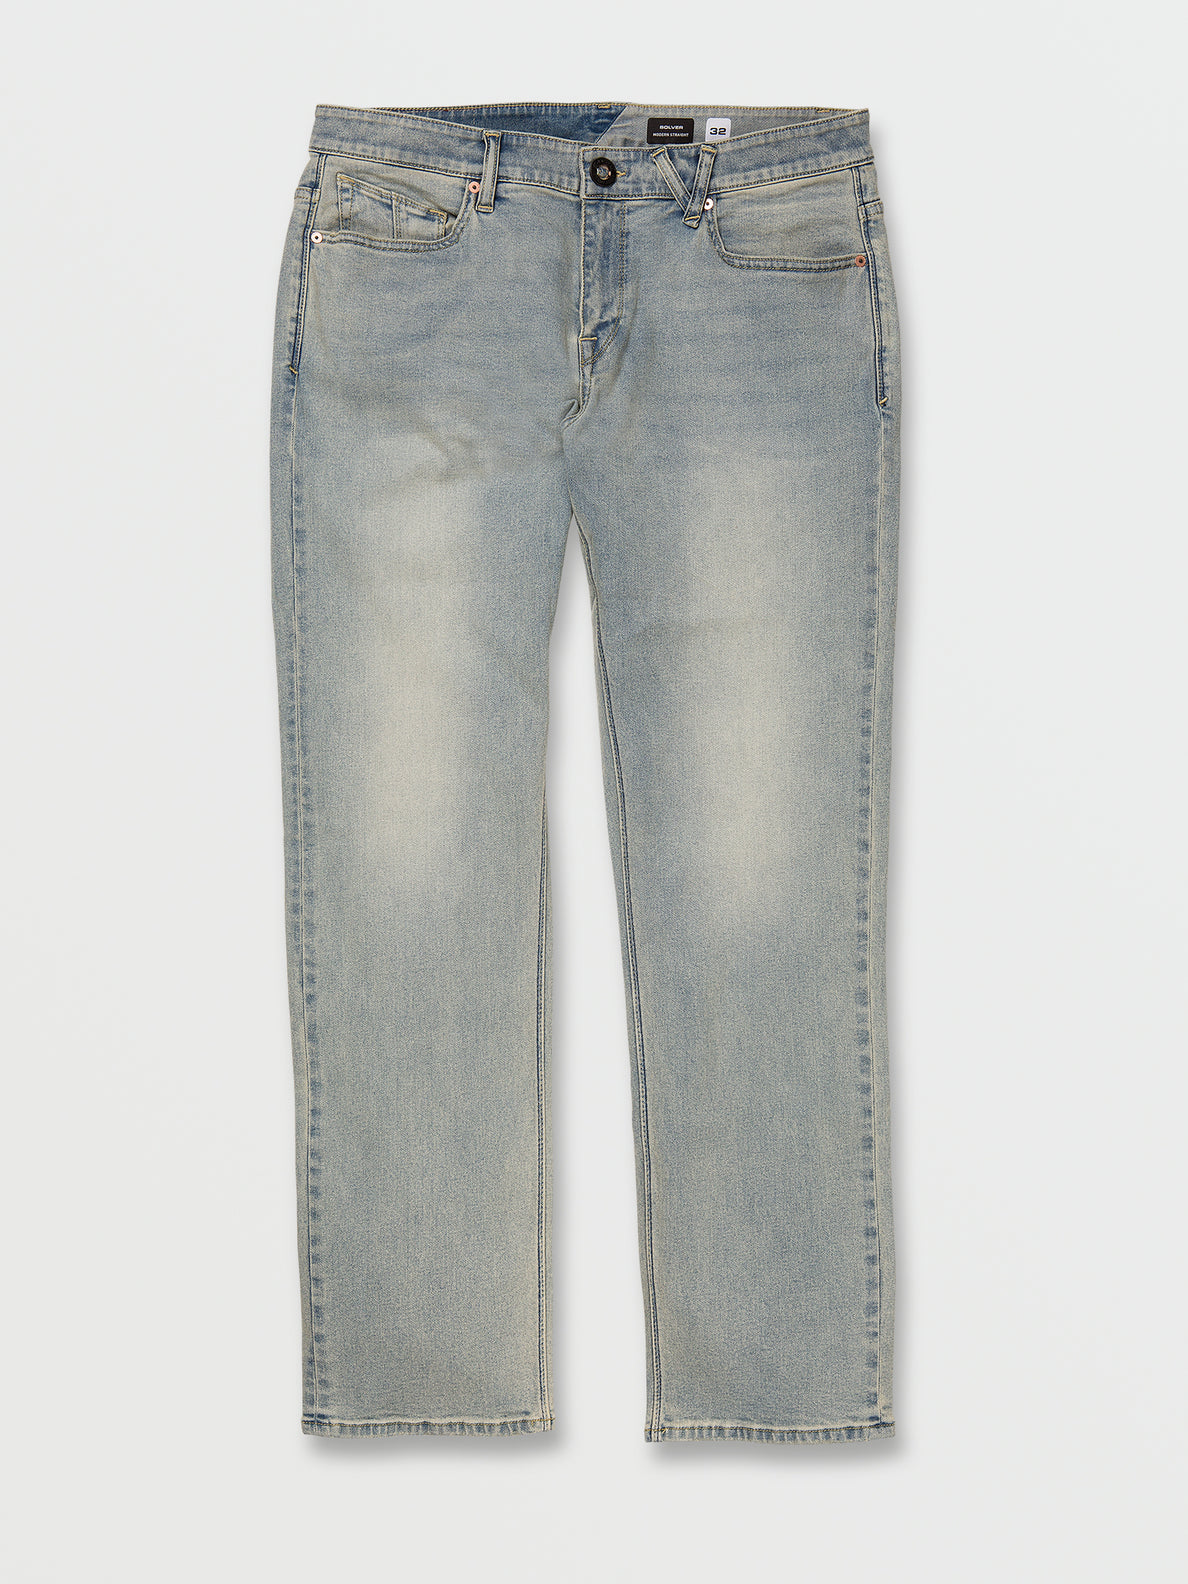 Solver Modern Fit Jeans - Worker Indigo Vintage (A1912303_WIV) [F]